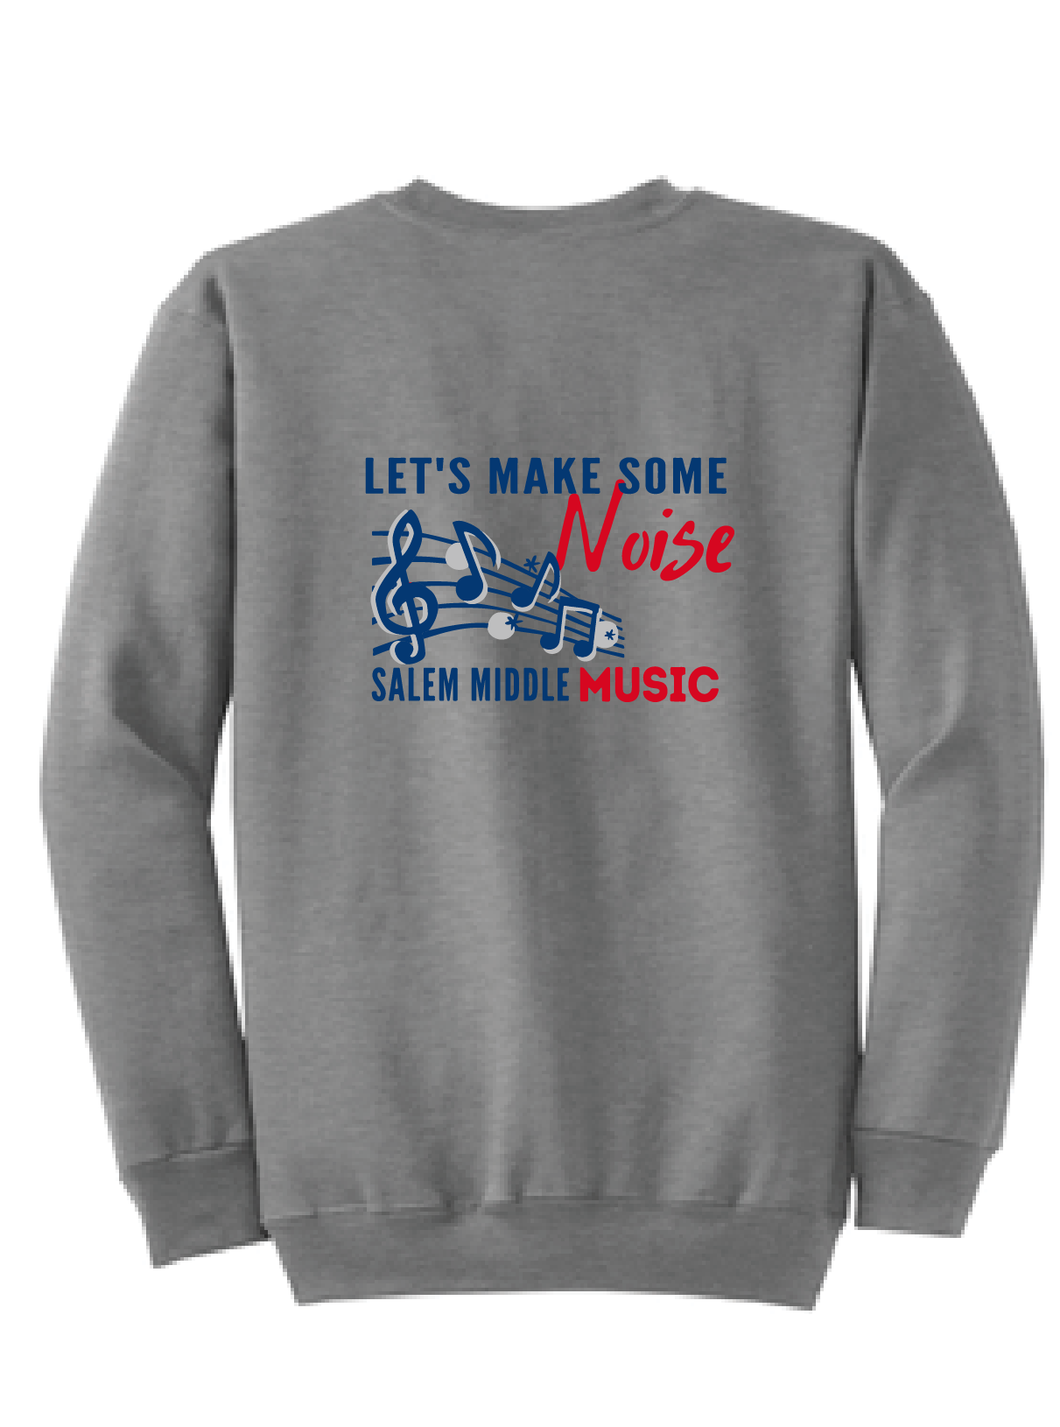 Fleece Crewneck Sweatshirt / Athletic Heather / Salem Middle School Music